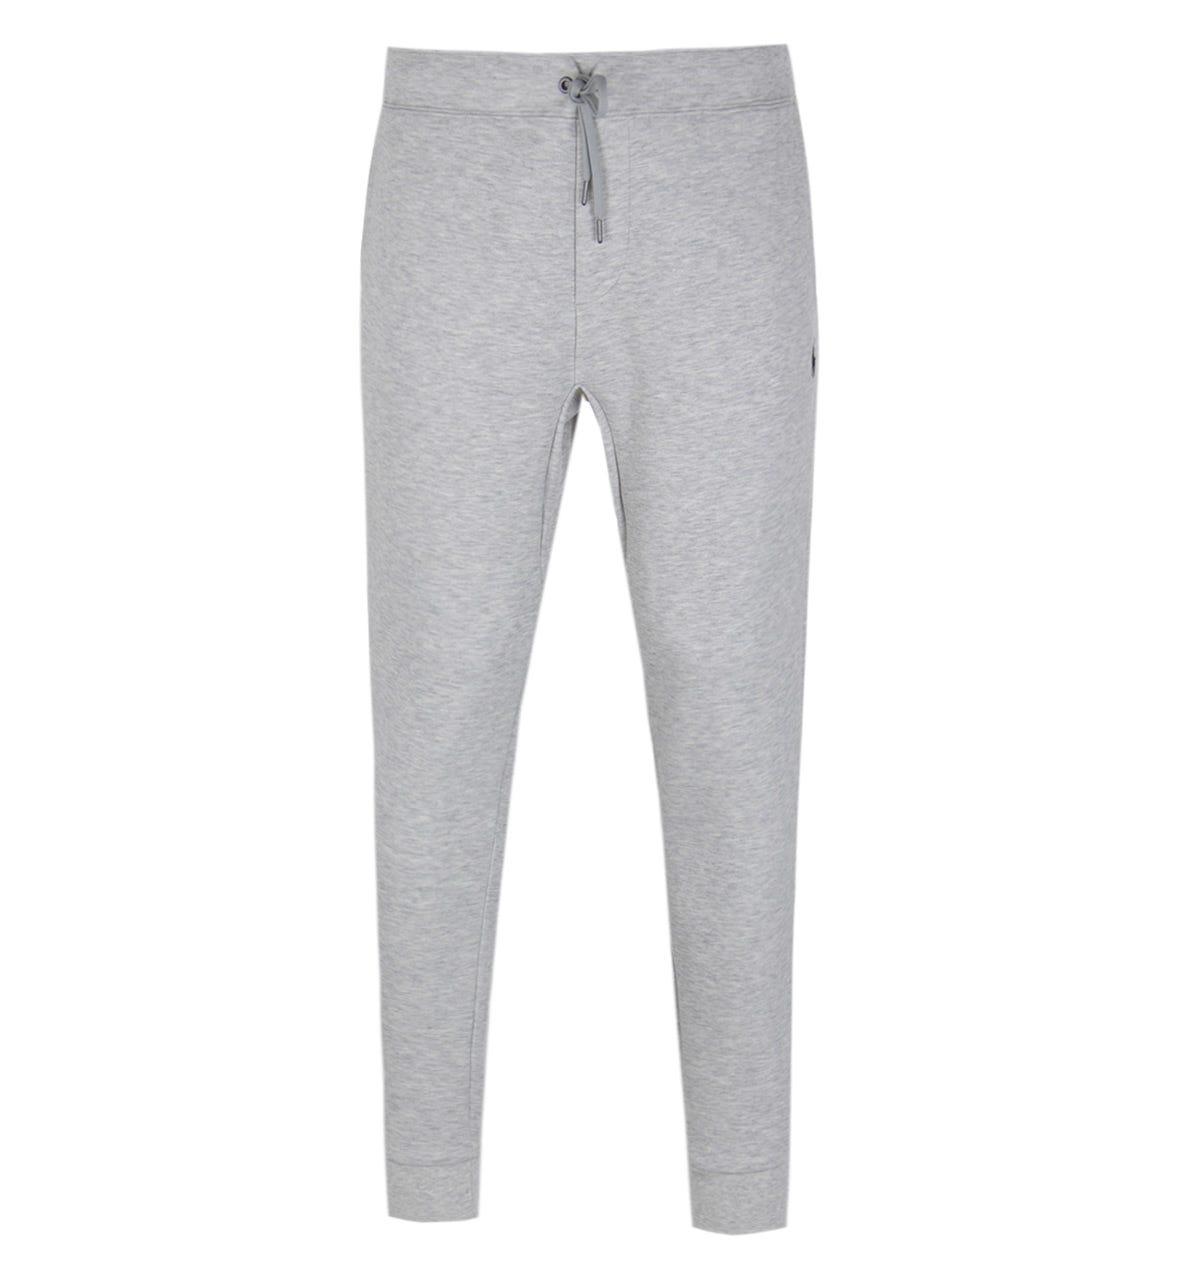 Polo Ralph Lauren Tech Fleece Grey Sweatpants in Gray for Men - Lyst